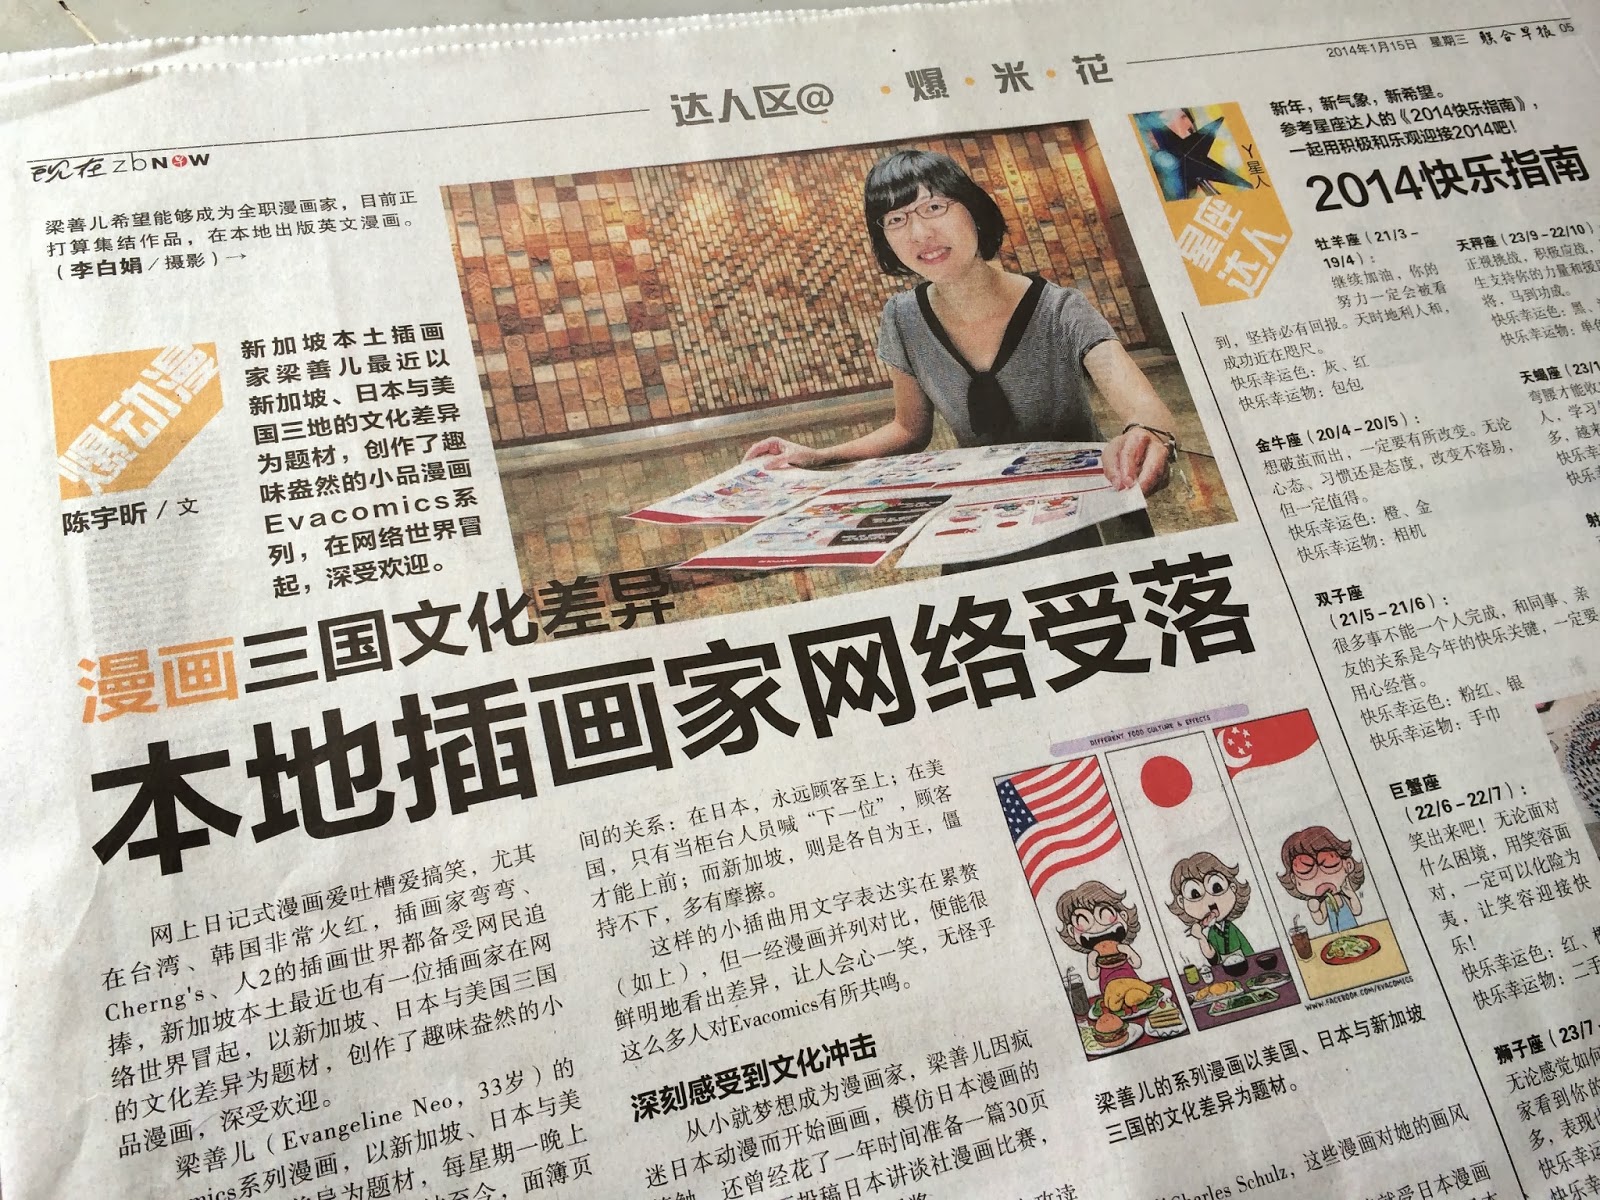 Evacomics on local Chinese newspaper Zaobao